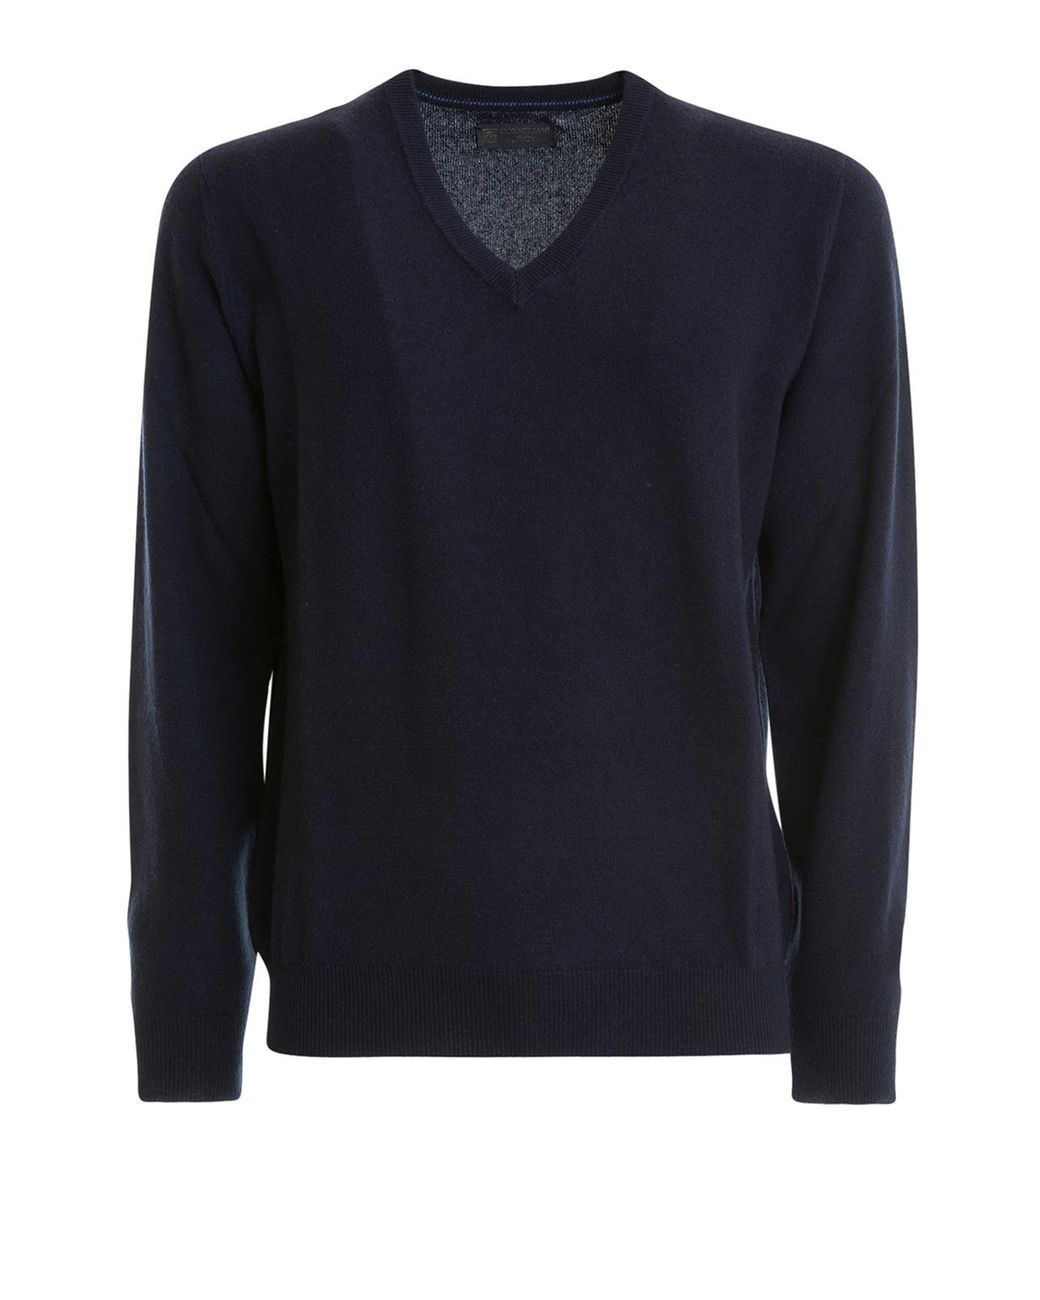 Corneliani Blue Cashmere V-neck Sweater for Men - Lyst